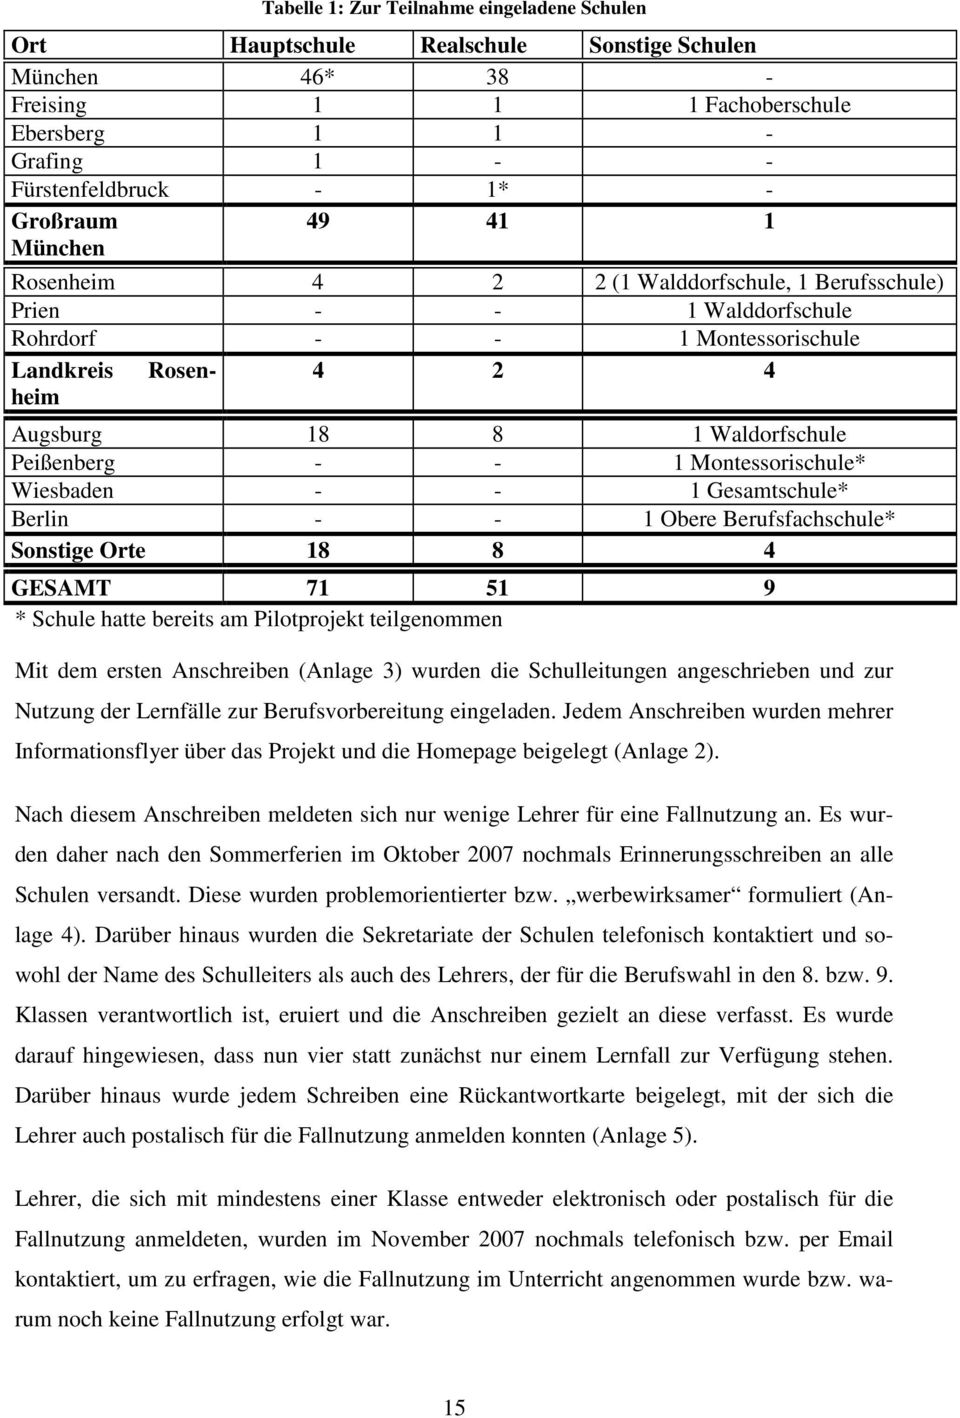 Montessorischule* Wiesbaden - - 1 Gesamtschule* Berlin - - 1 Obere Berufsfachschule* Sonstige Orte 18 8 4 GESAMT 71 51 9 * Schule hatte bereits am Pilotprojekt teilgenommen Mit dem ersten Anschreiben